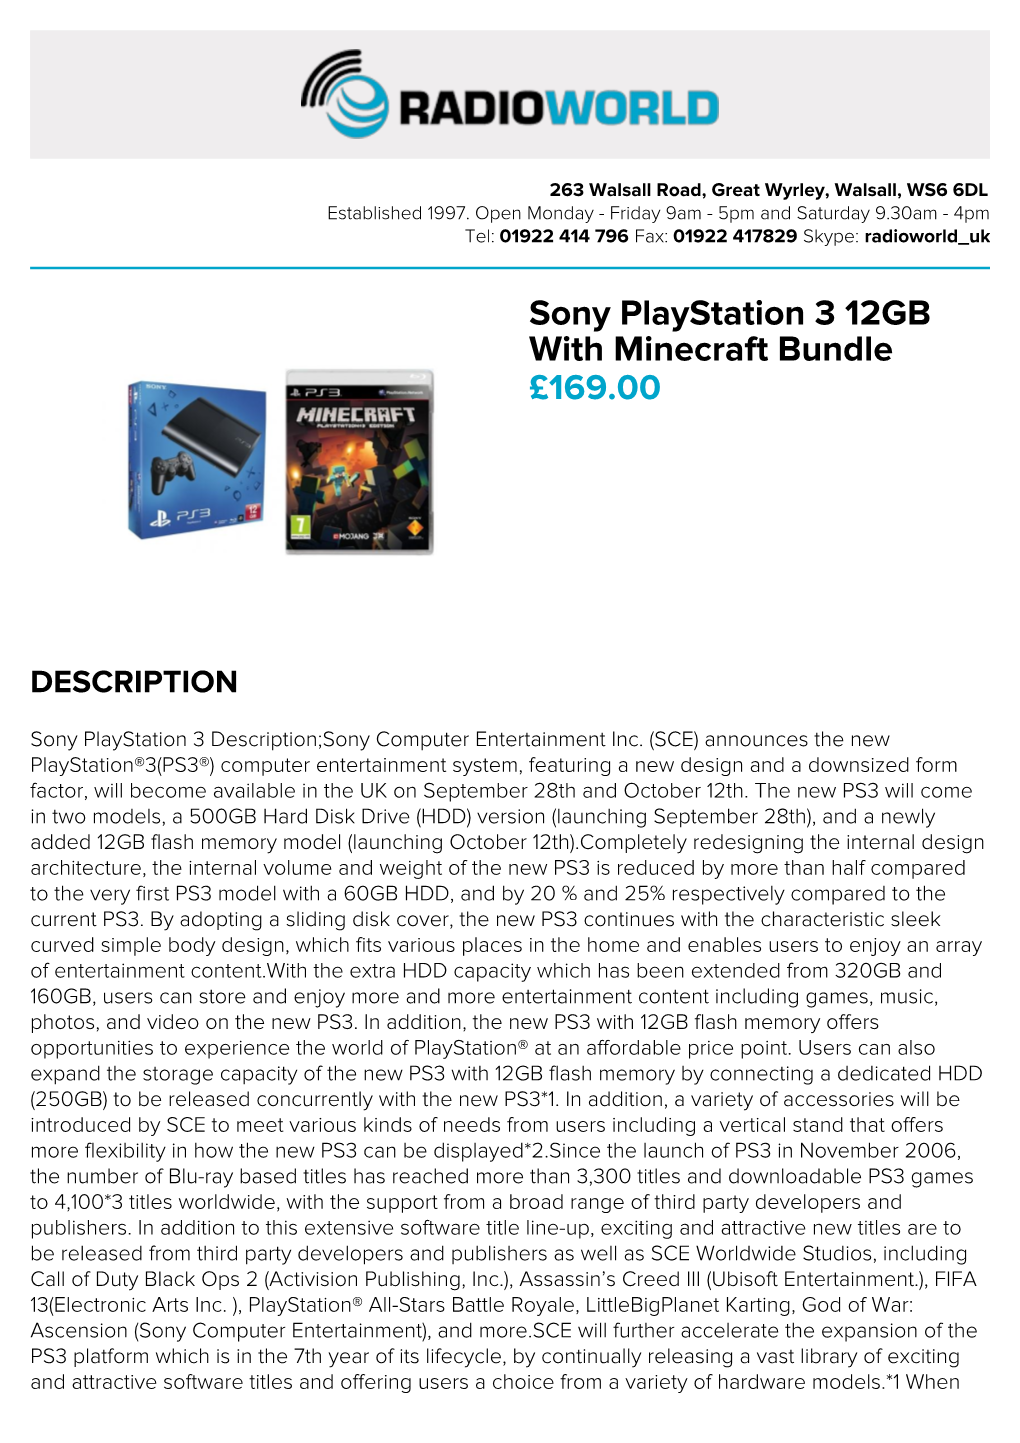 Sony Playstation 3 12GB with Minecraft Bundle £169.00